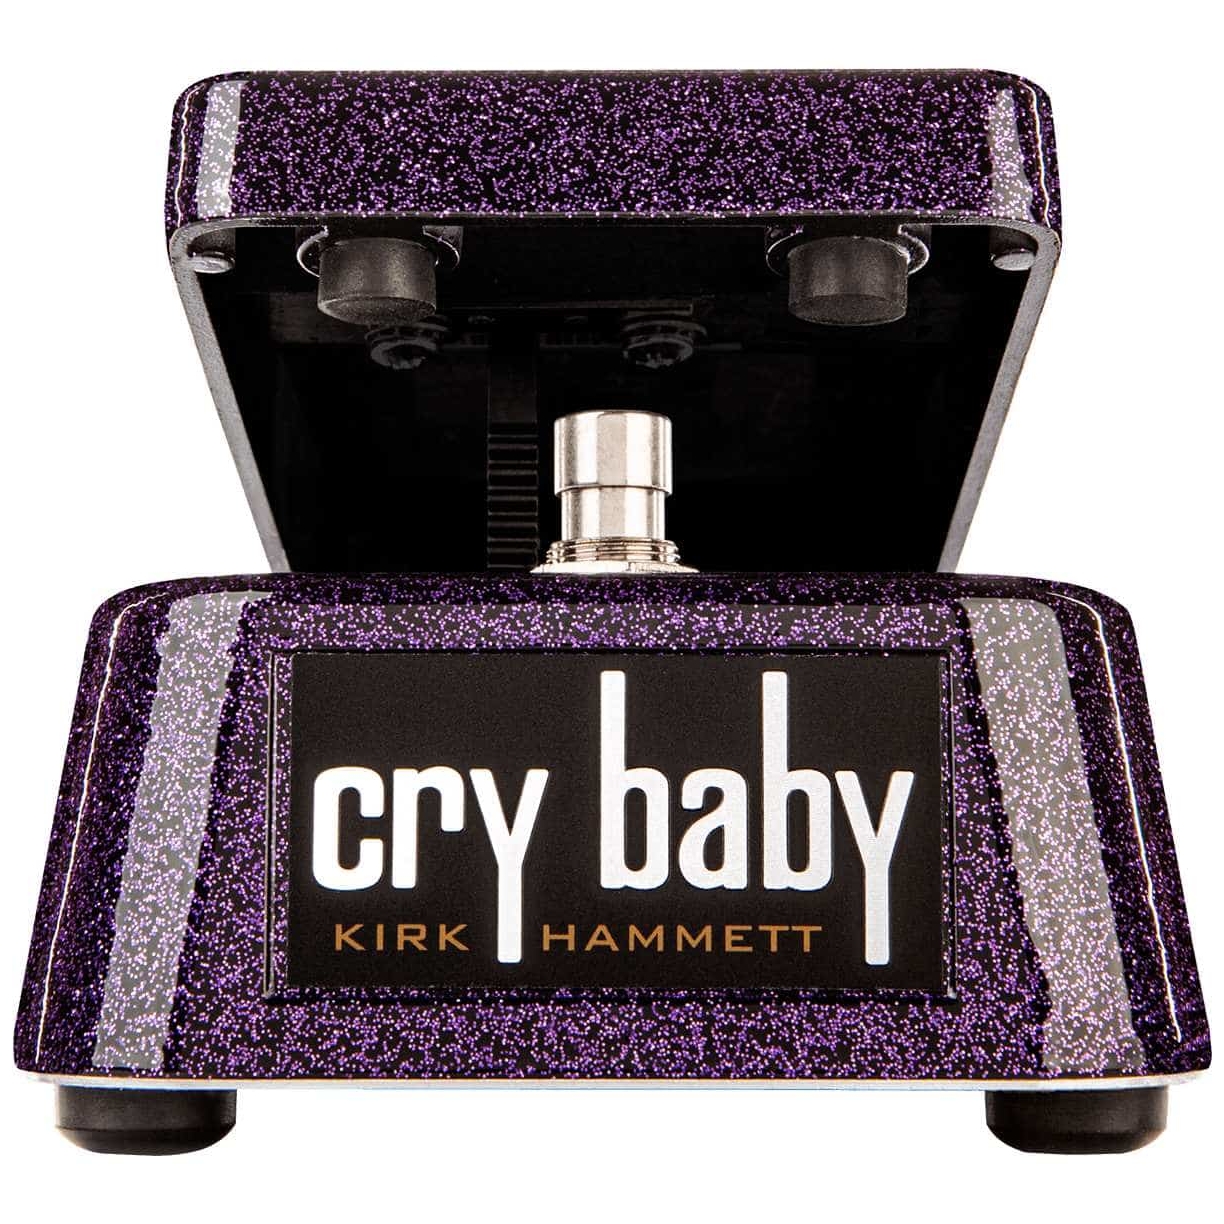 Dunlop KH95X Kirk Hammett Cry Baby Special Ed.